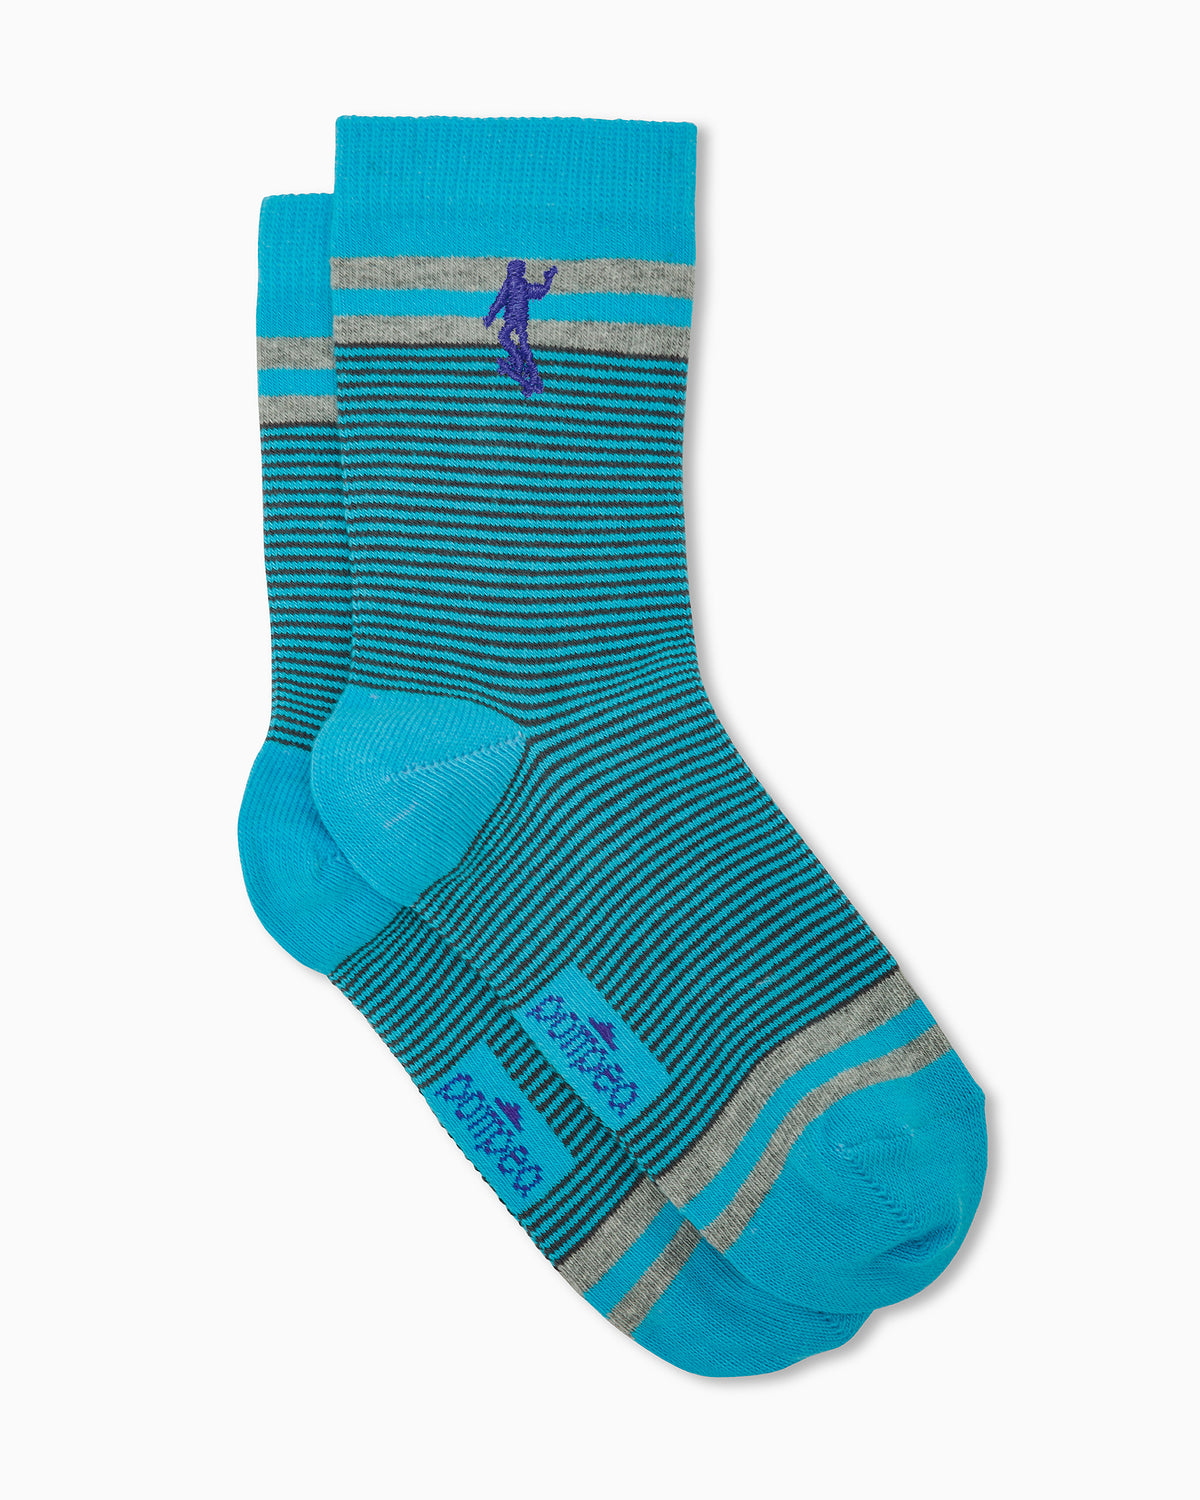 Carlo boys’ sock with striped pattern